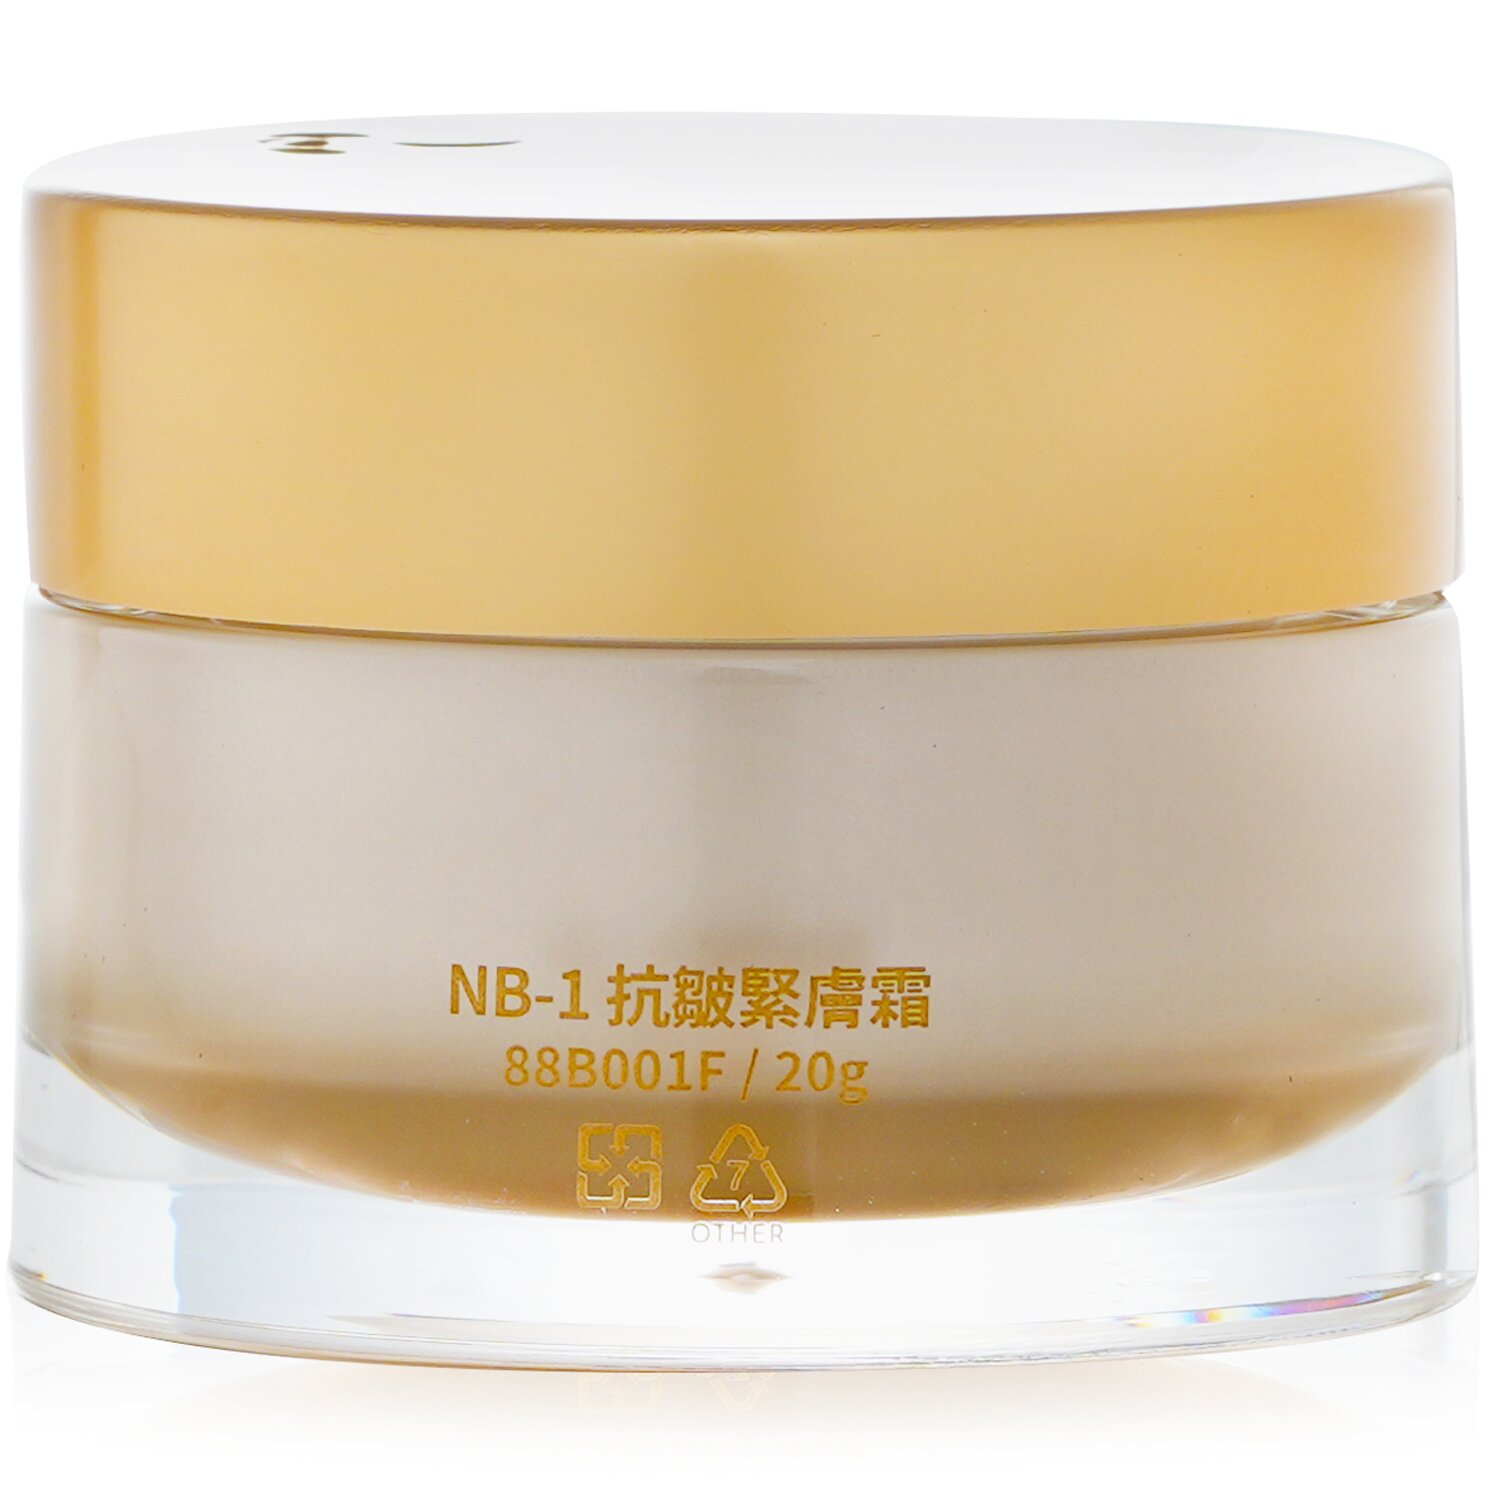 Natural Beauty NB-1 Ultime Restoration NB-1 Anti-Wrinkle Firming Creme 20g/0.65oz